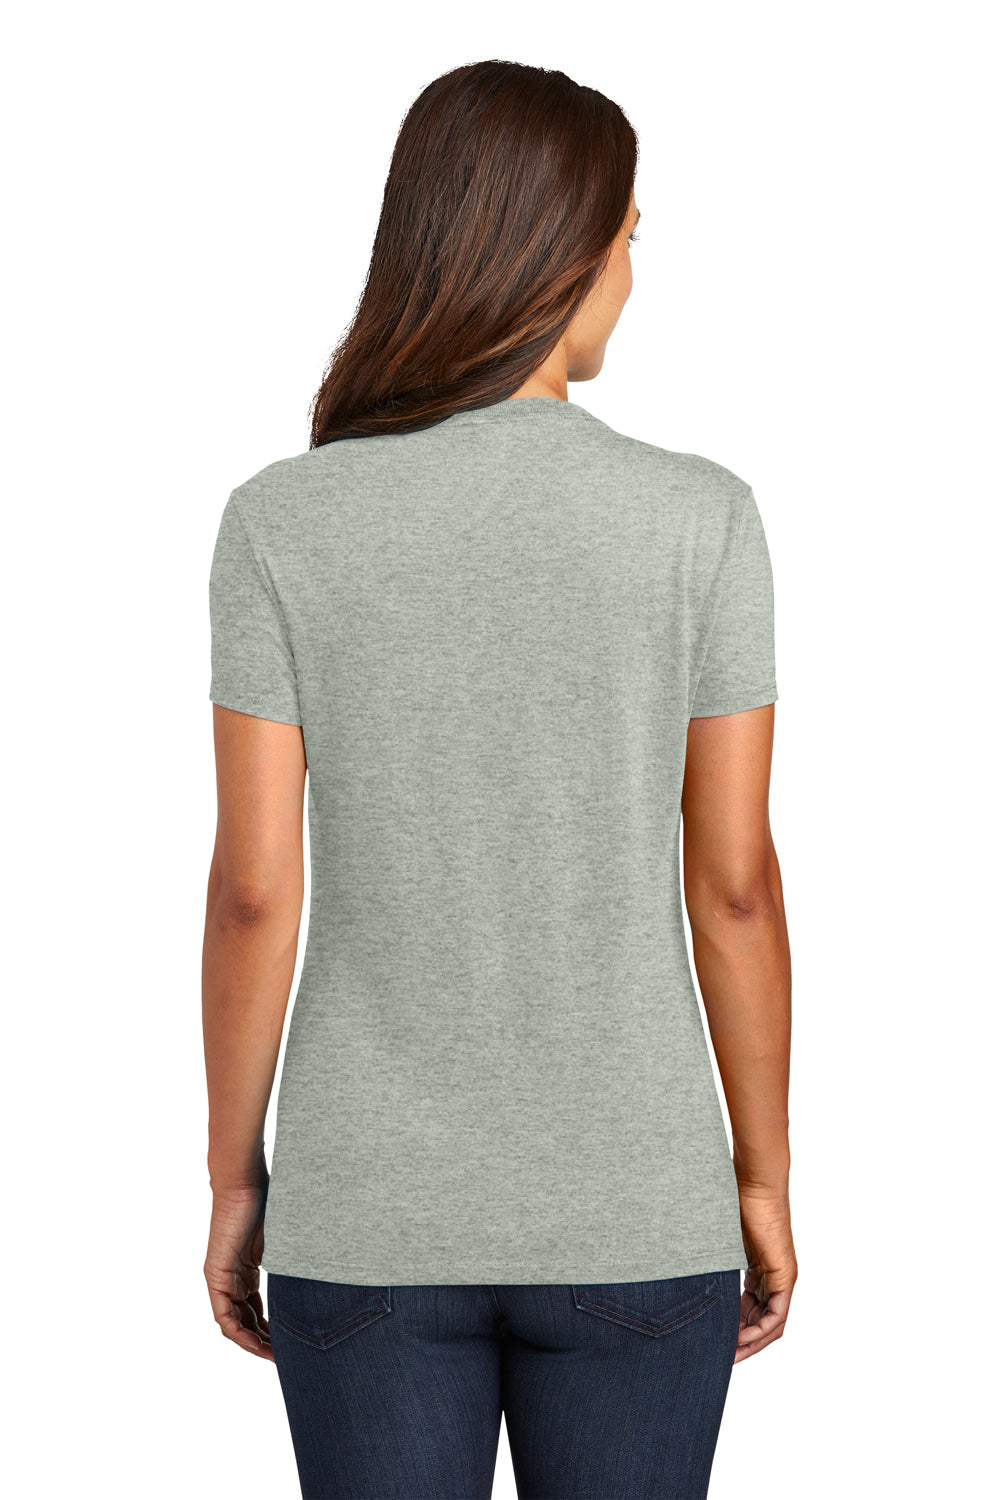 District DM130L Womens Perfect Tri Short Sleeve Crewneck T-Shirt Heather Grey Back